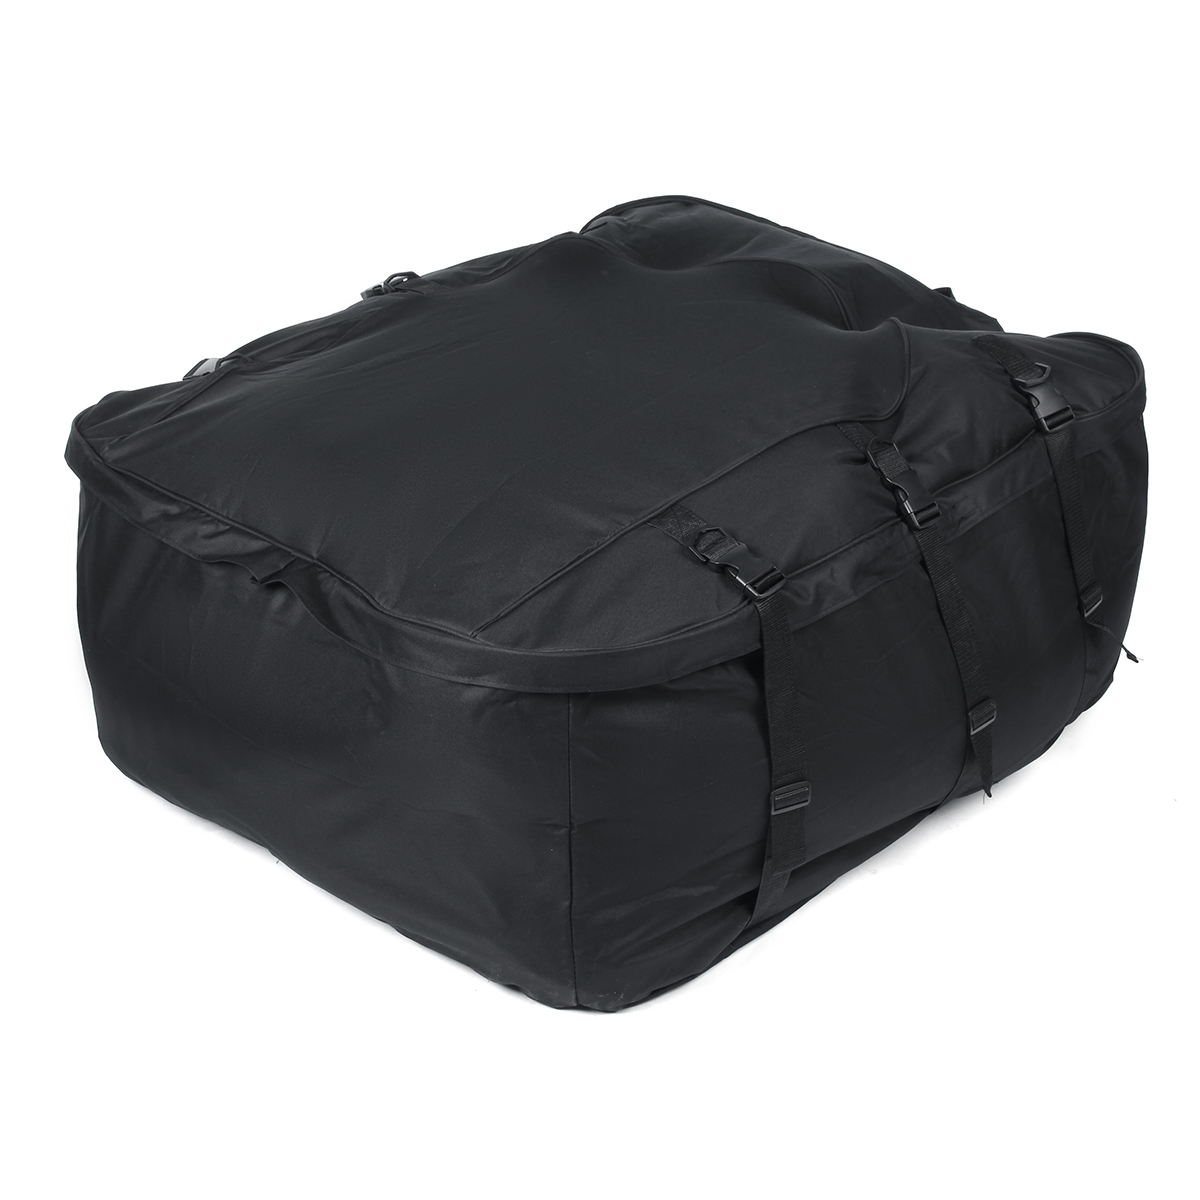 Portable-Travel-Storage-Bag-Waterproof-Car-SUV-Roof-Top-Rack-Bag-600D-Oxford-Travel-Luggage-Storage--1812090-7